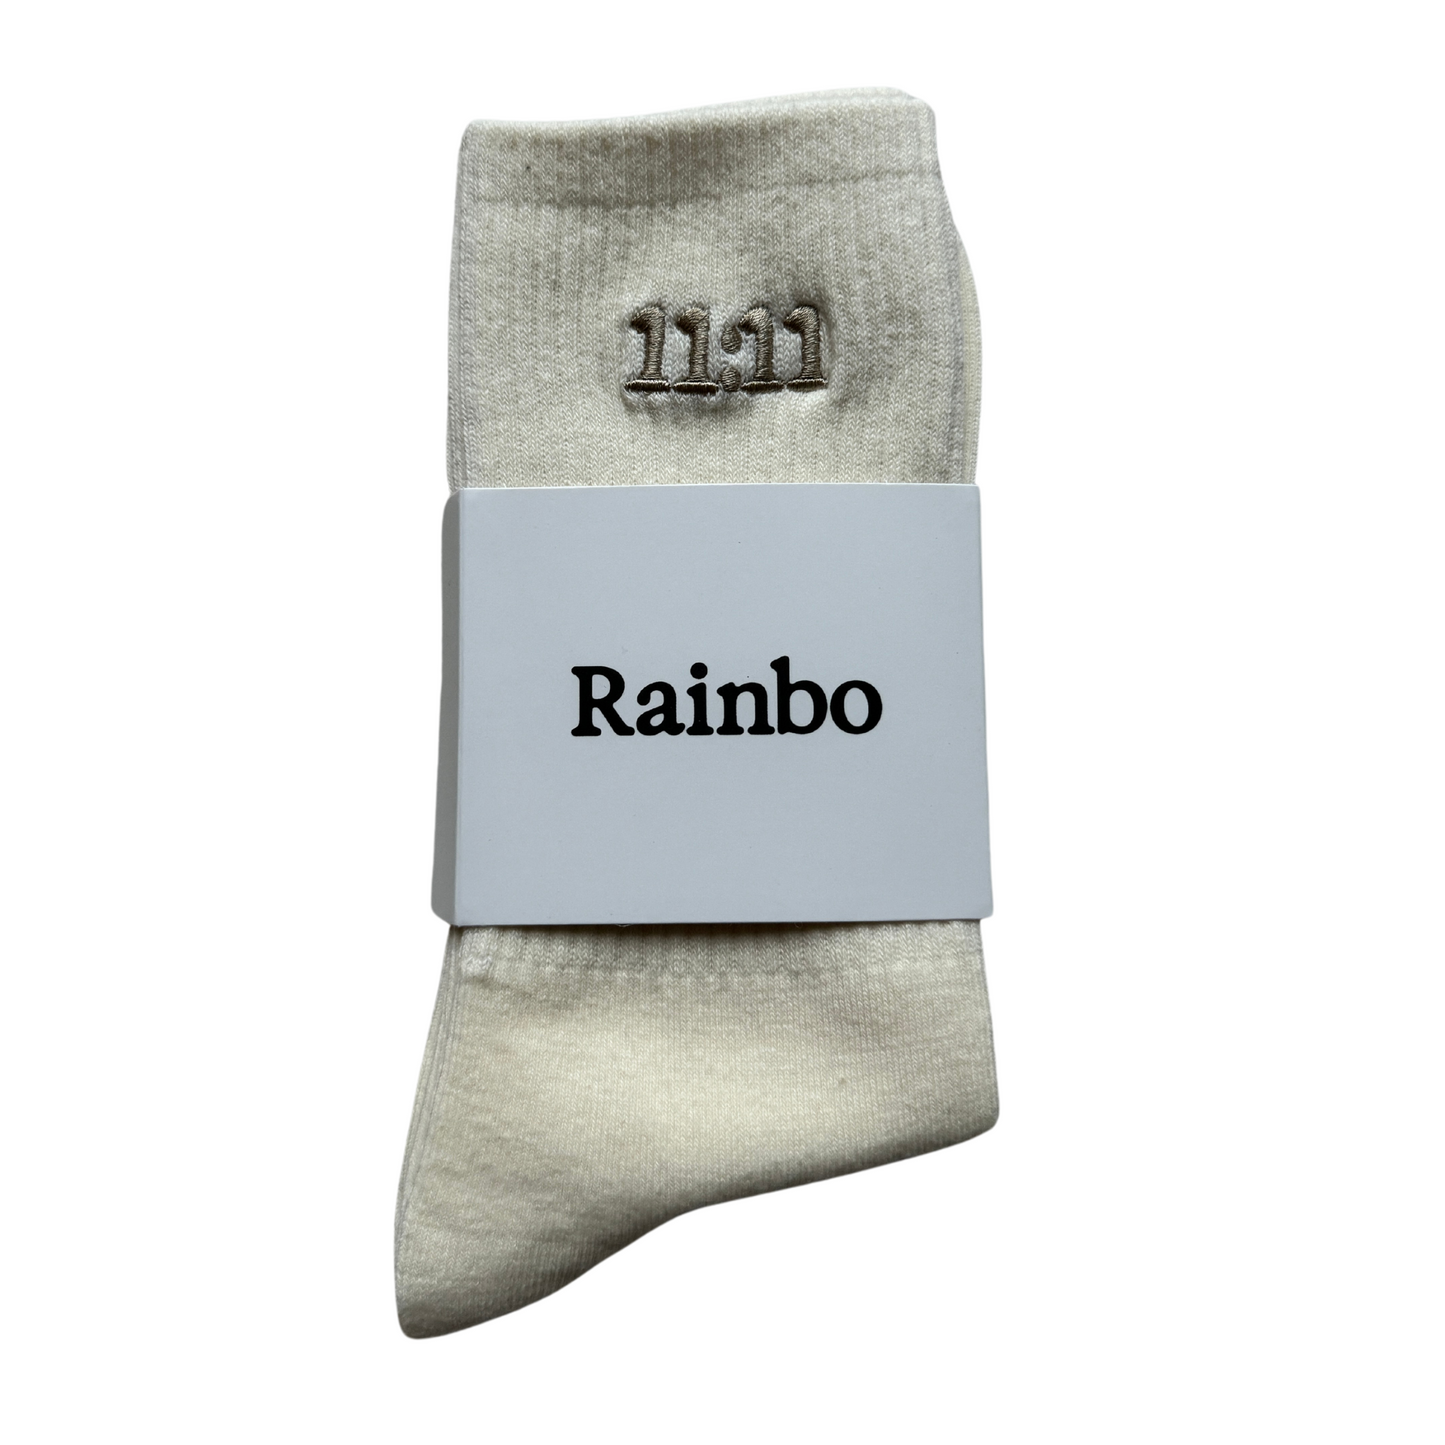 Rainbo Cozy Socks